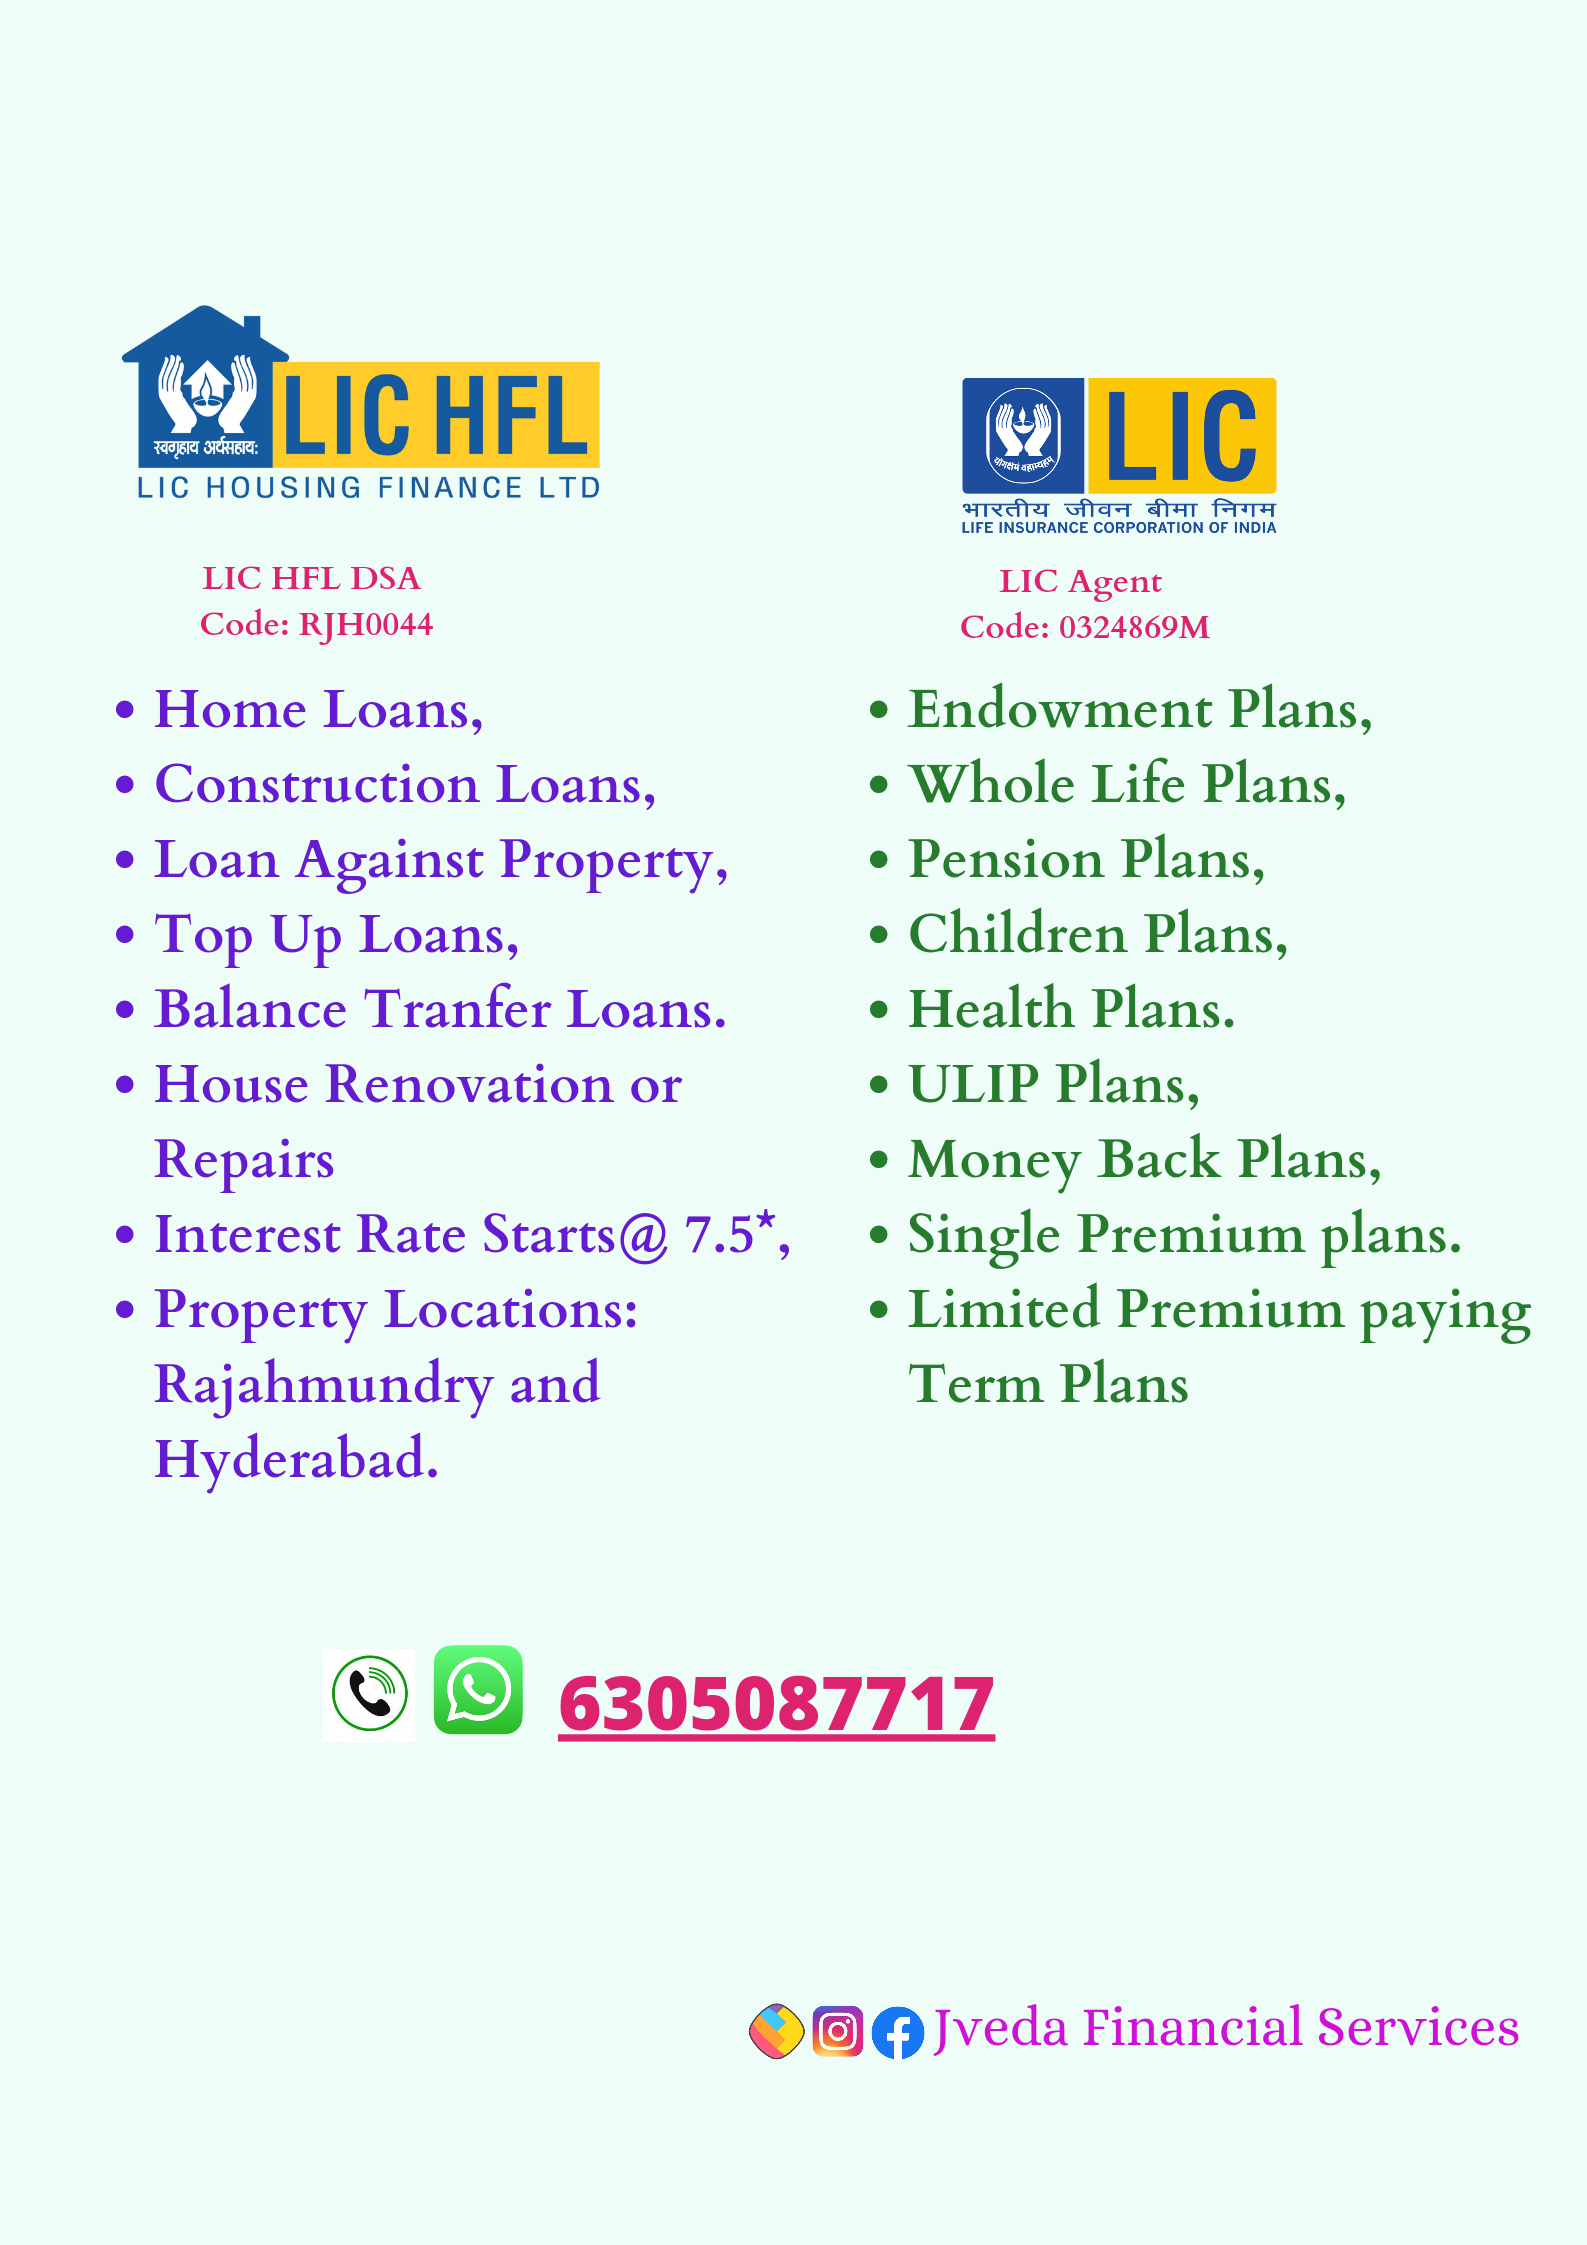 LIC Housing plans to raise Rs 50,500 crore